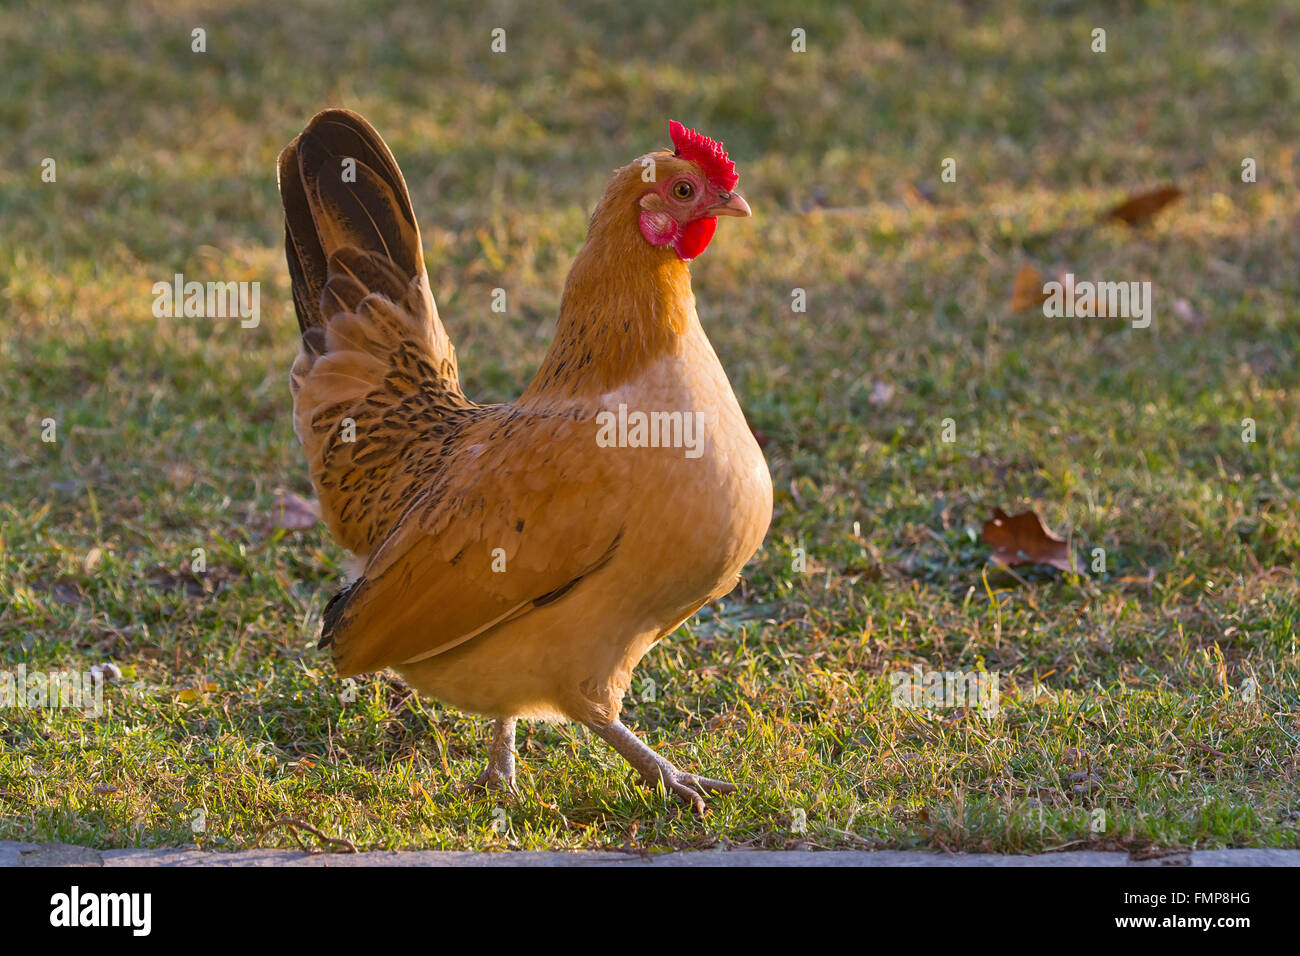 Bantam Rosecomb poulet (Gallus gallus f. domestica), Hen, Tyrol, Autriche Banque D'Images